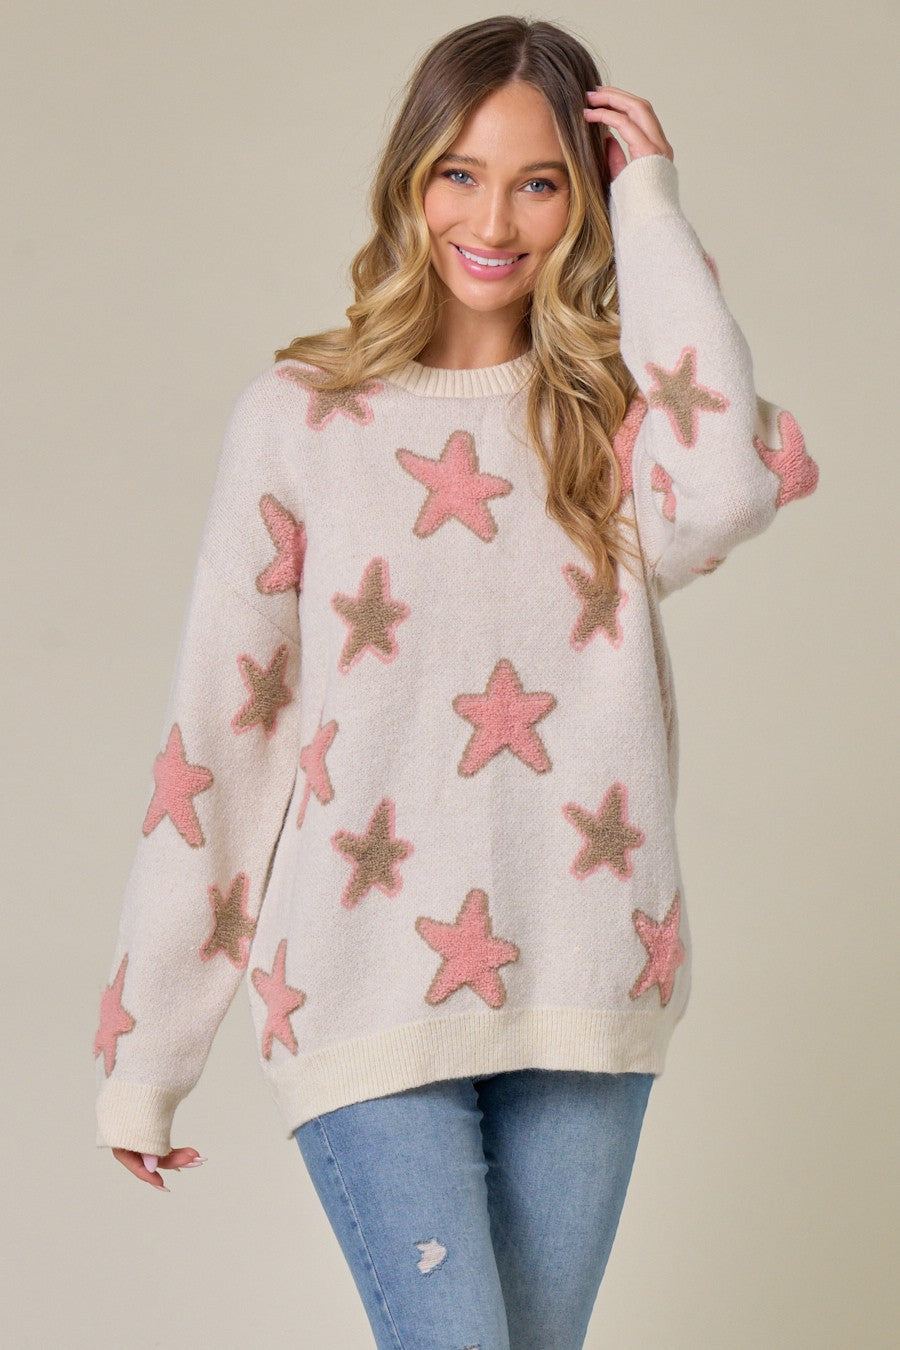 Women's Long Sleeve Crew Neck Star Printed Tunic Sweater